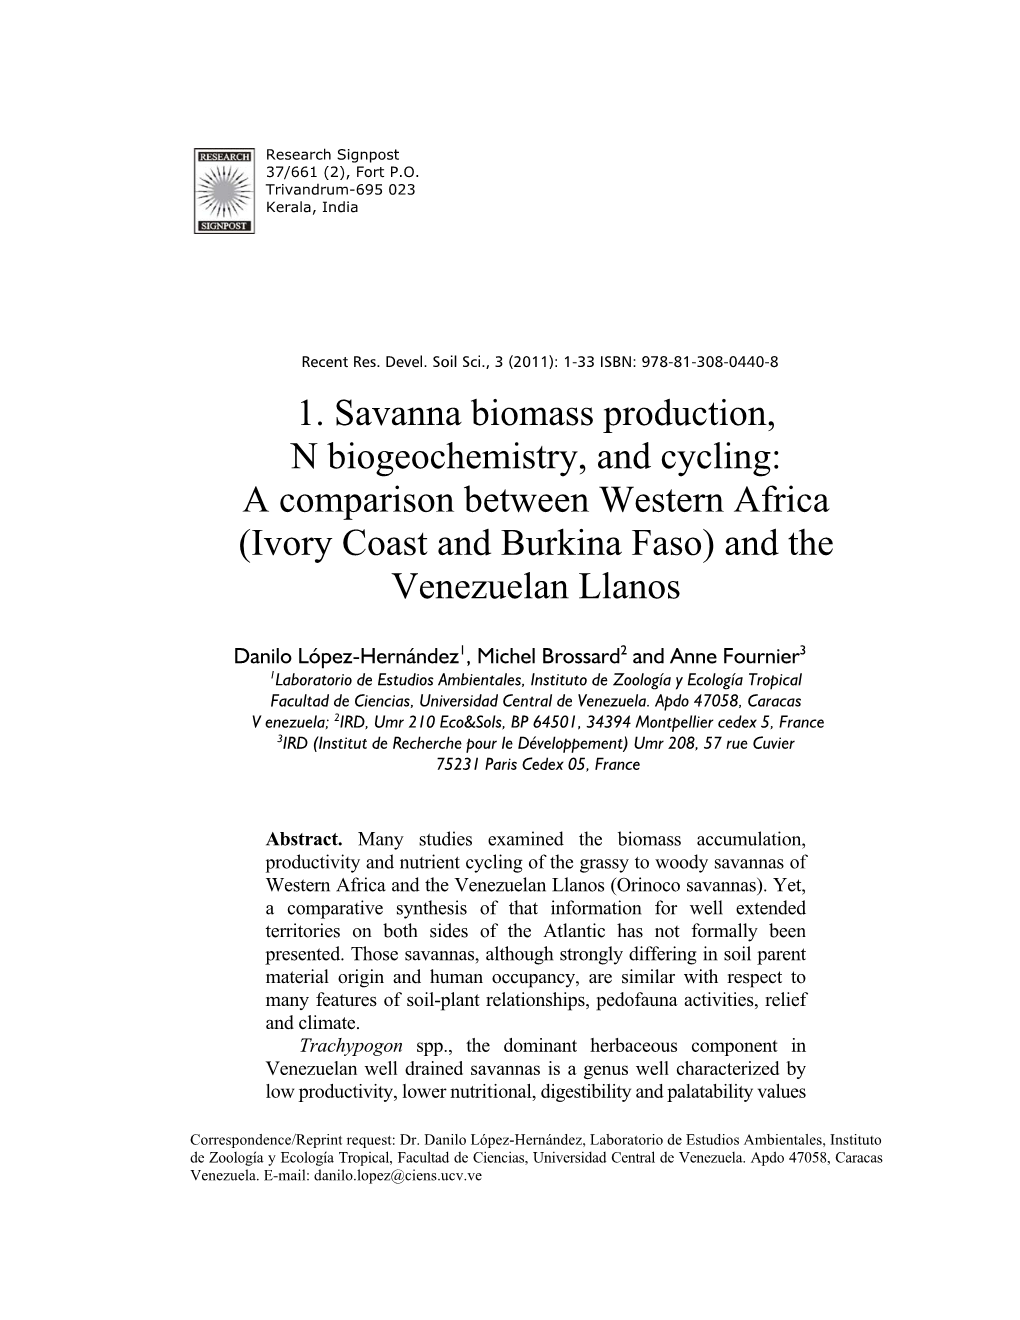 Savanna Biomass Production, N Biogeochemistry, and Cycling: a Comparison Between Western Africa (Ivory Coast and Burkina Faso) and the Venezuelan Llanos